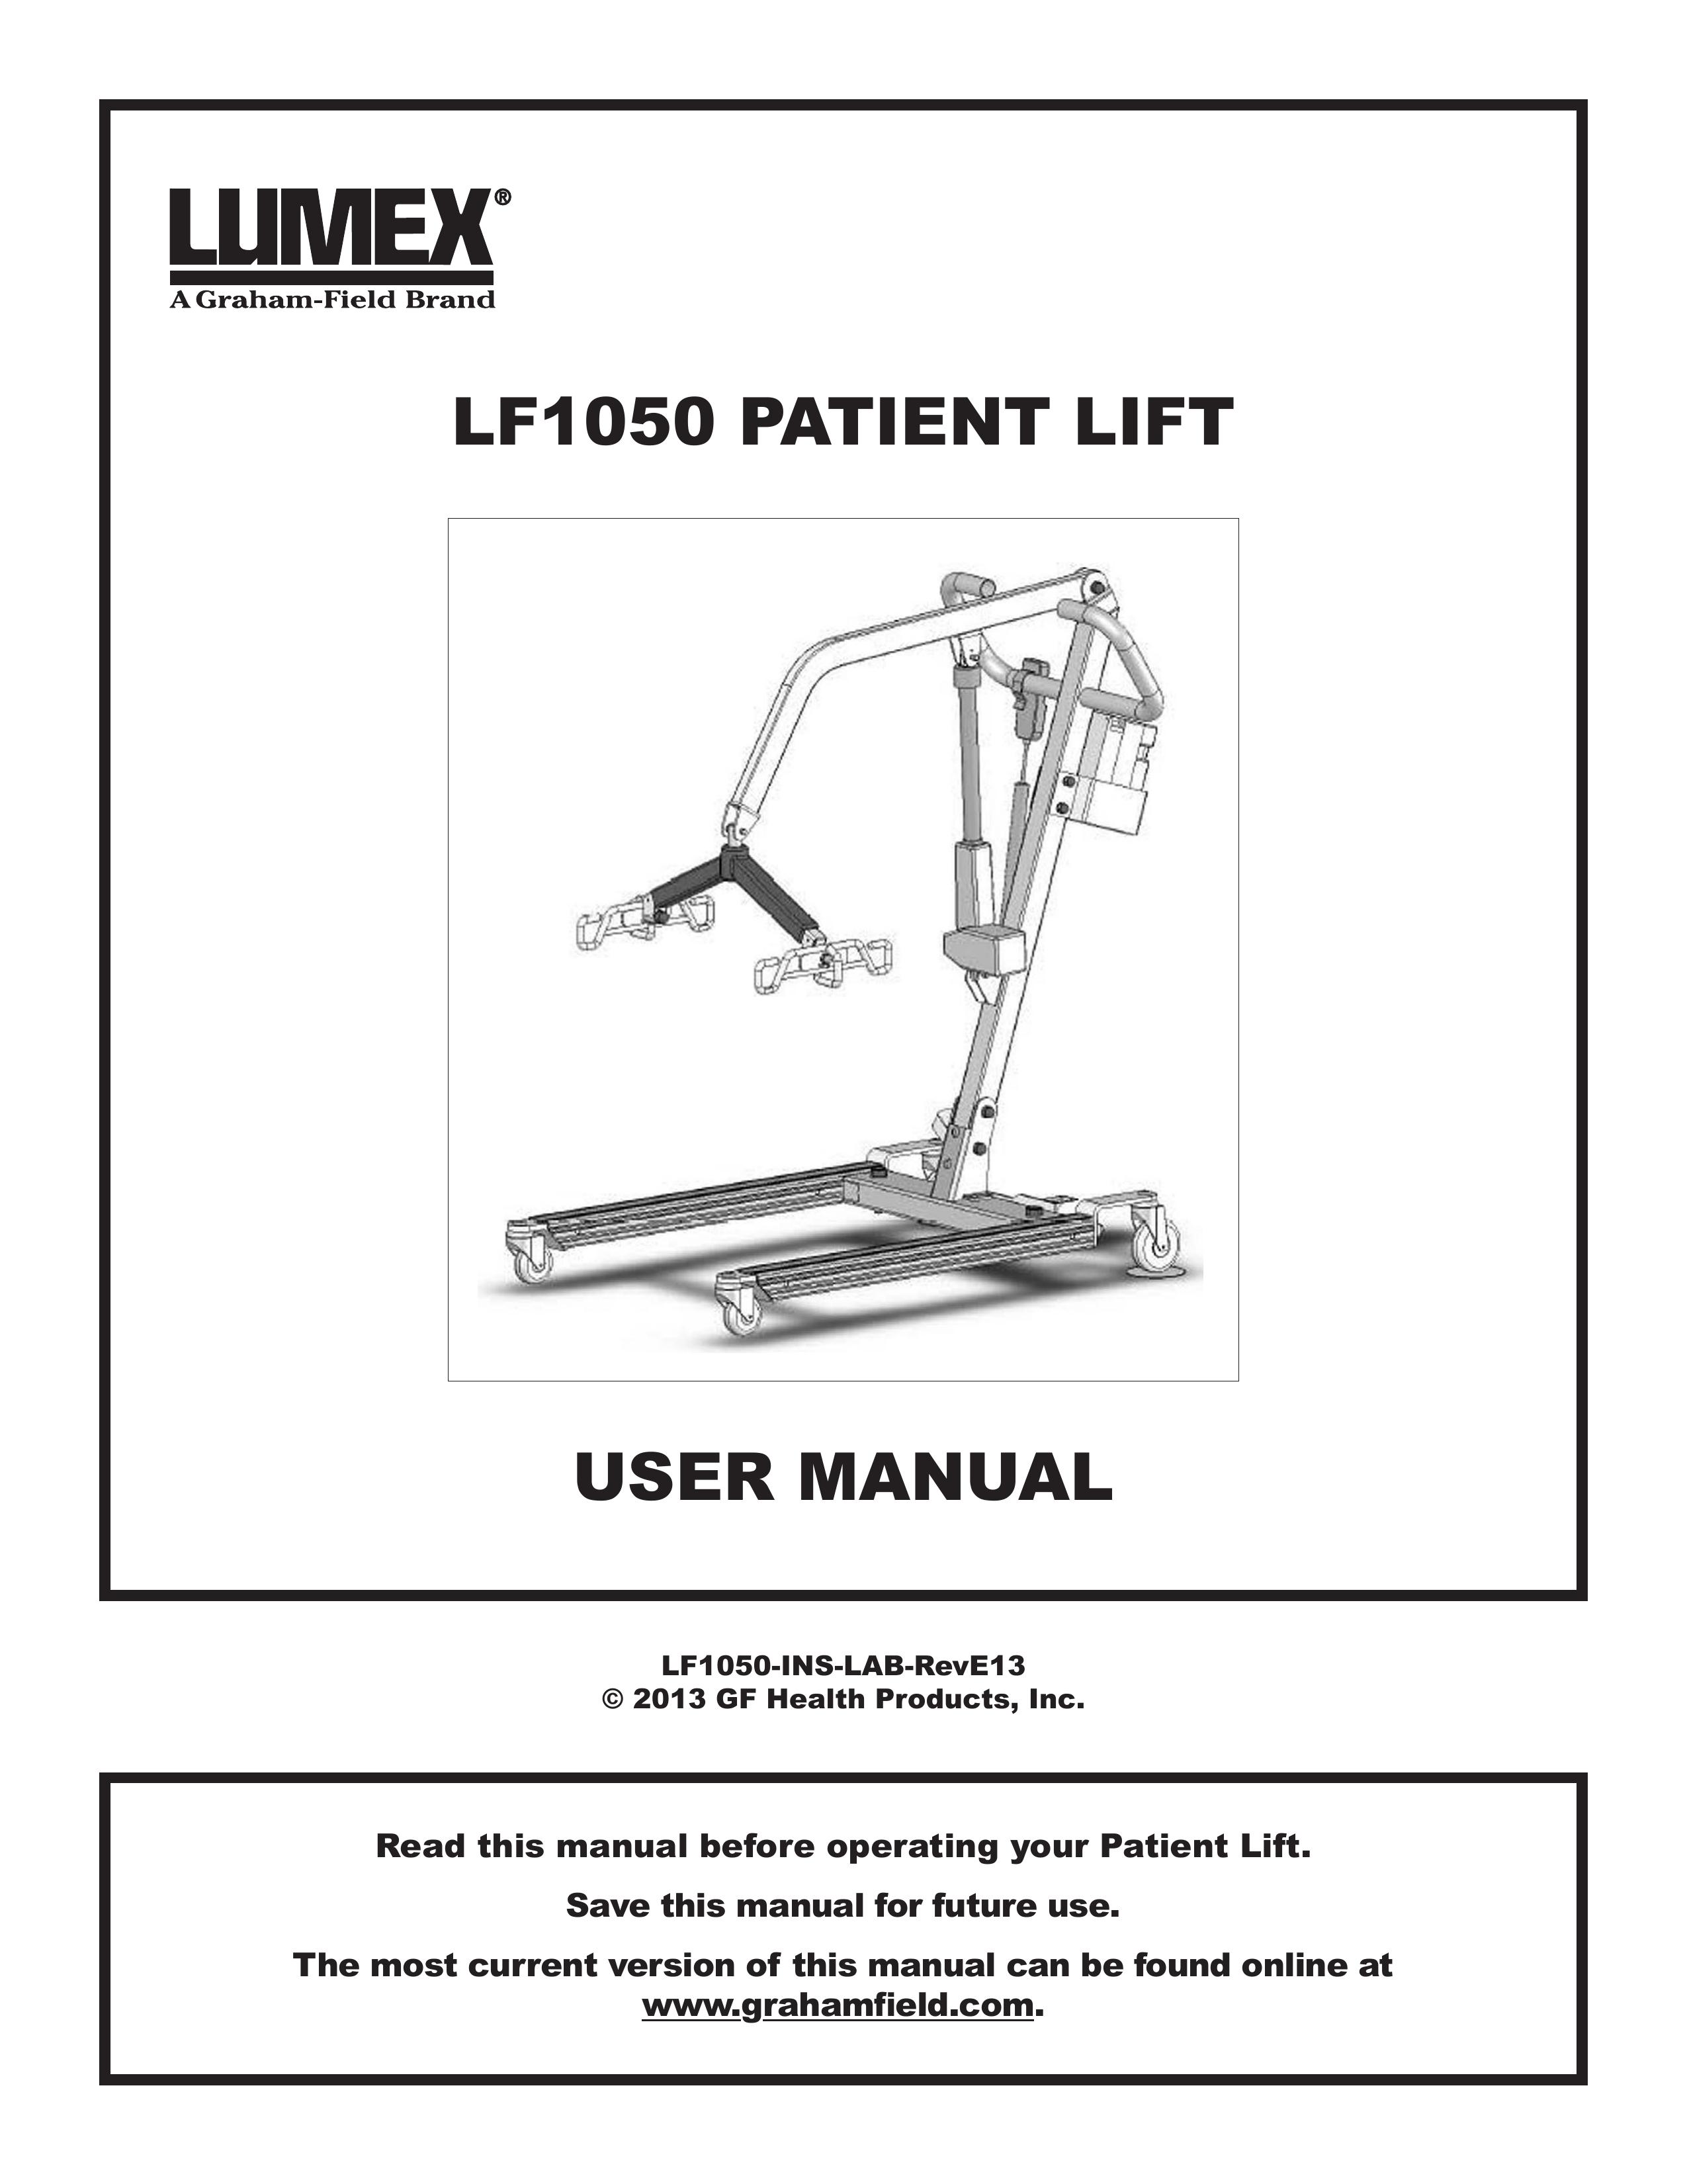 Graham Field LF1050 Personal Lift User Manual